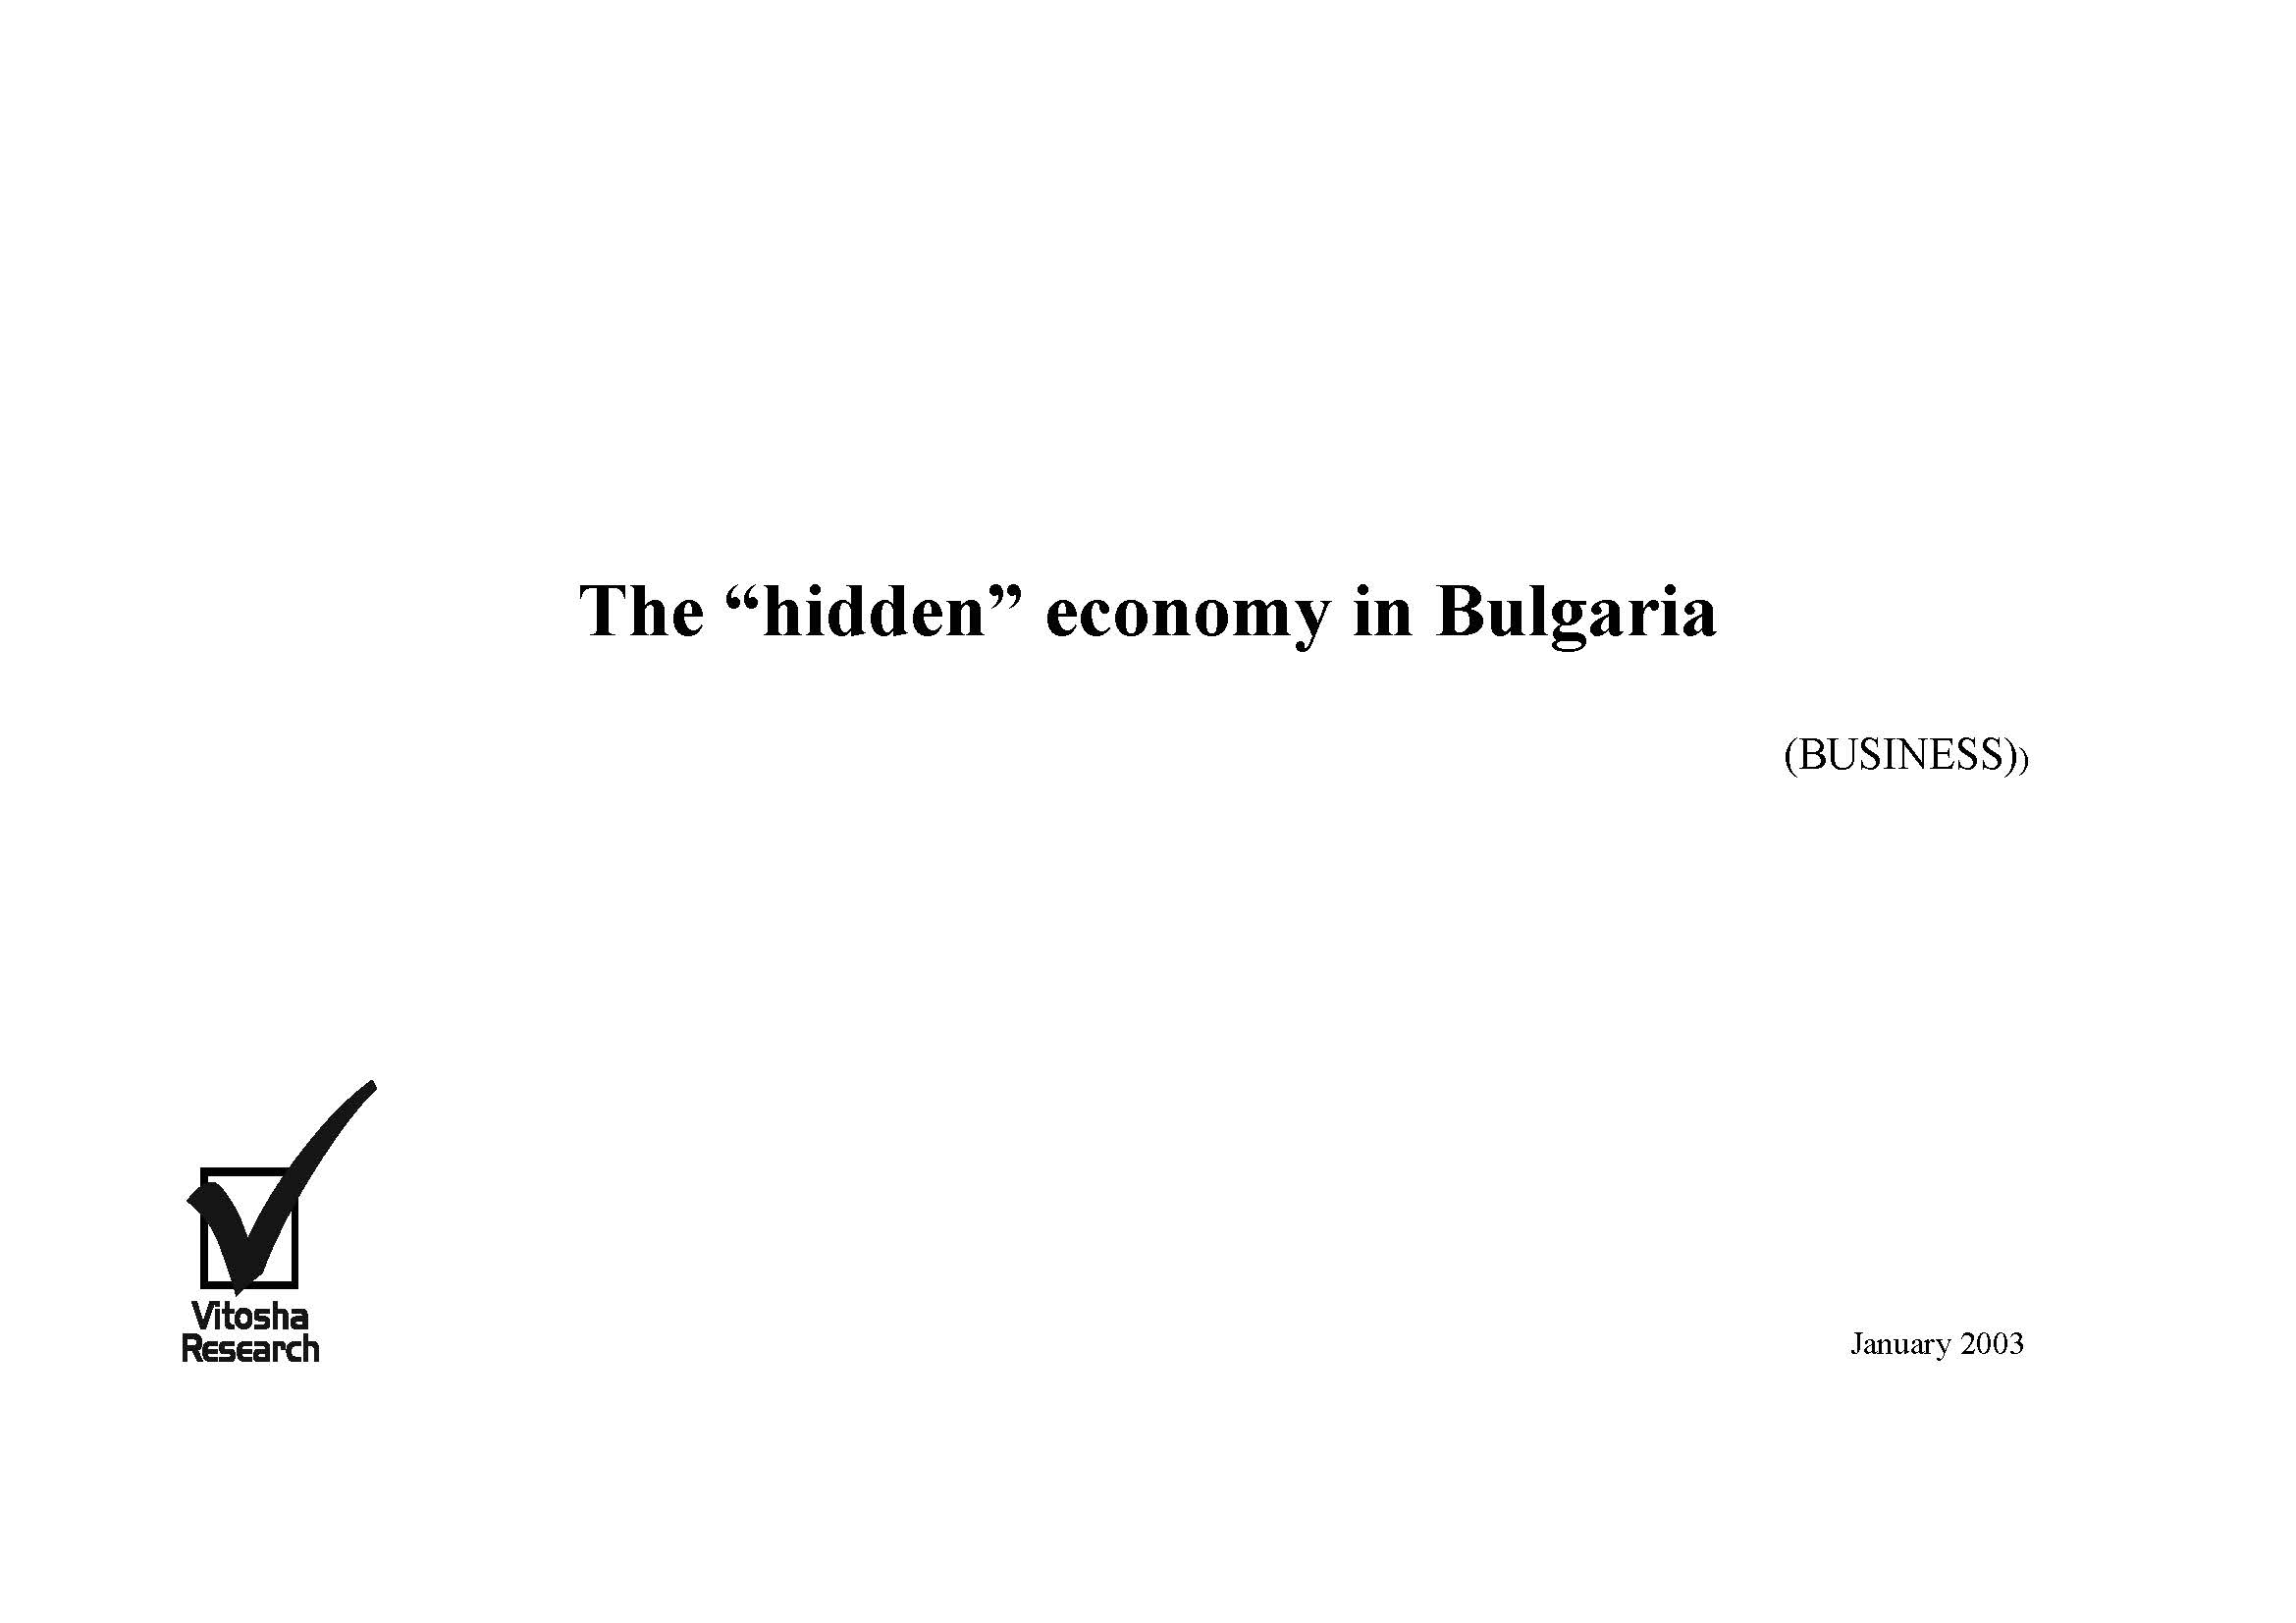 The Hidden Economy in Bulgaria (BUSINESS), December 2002